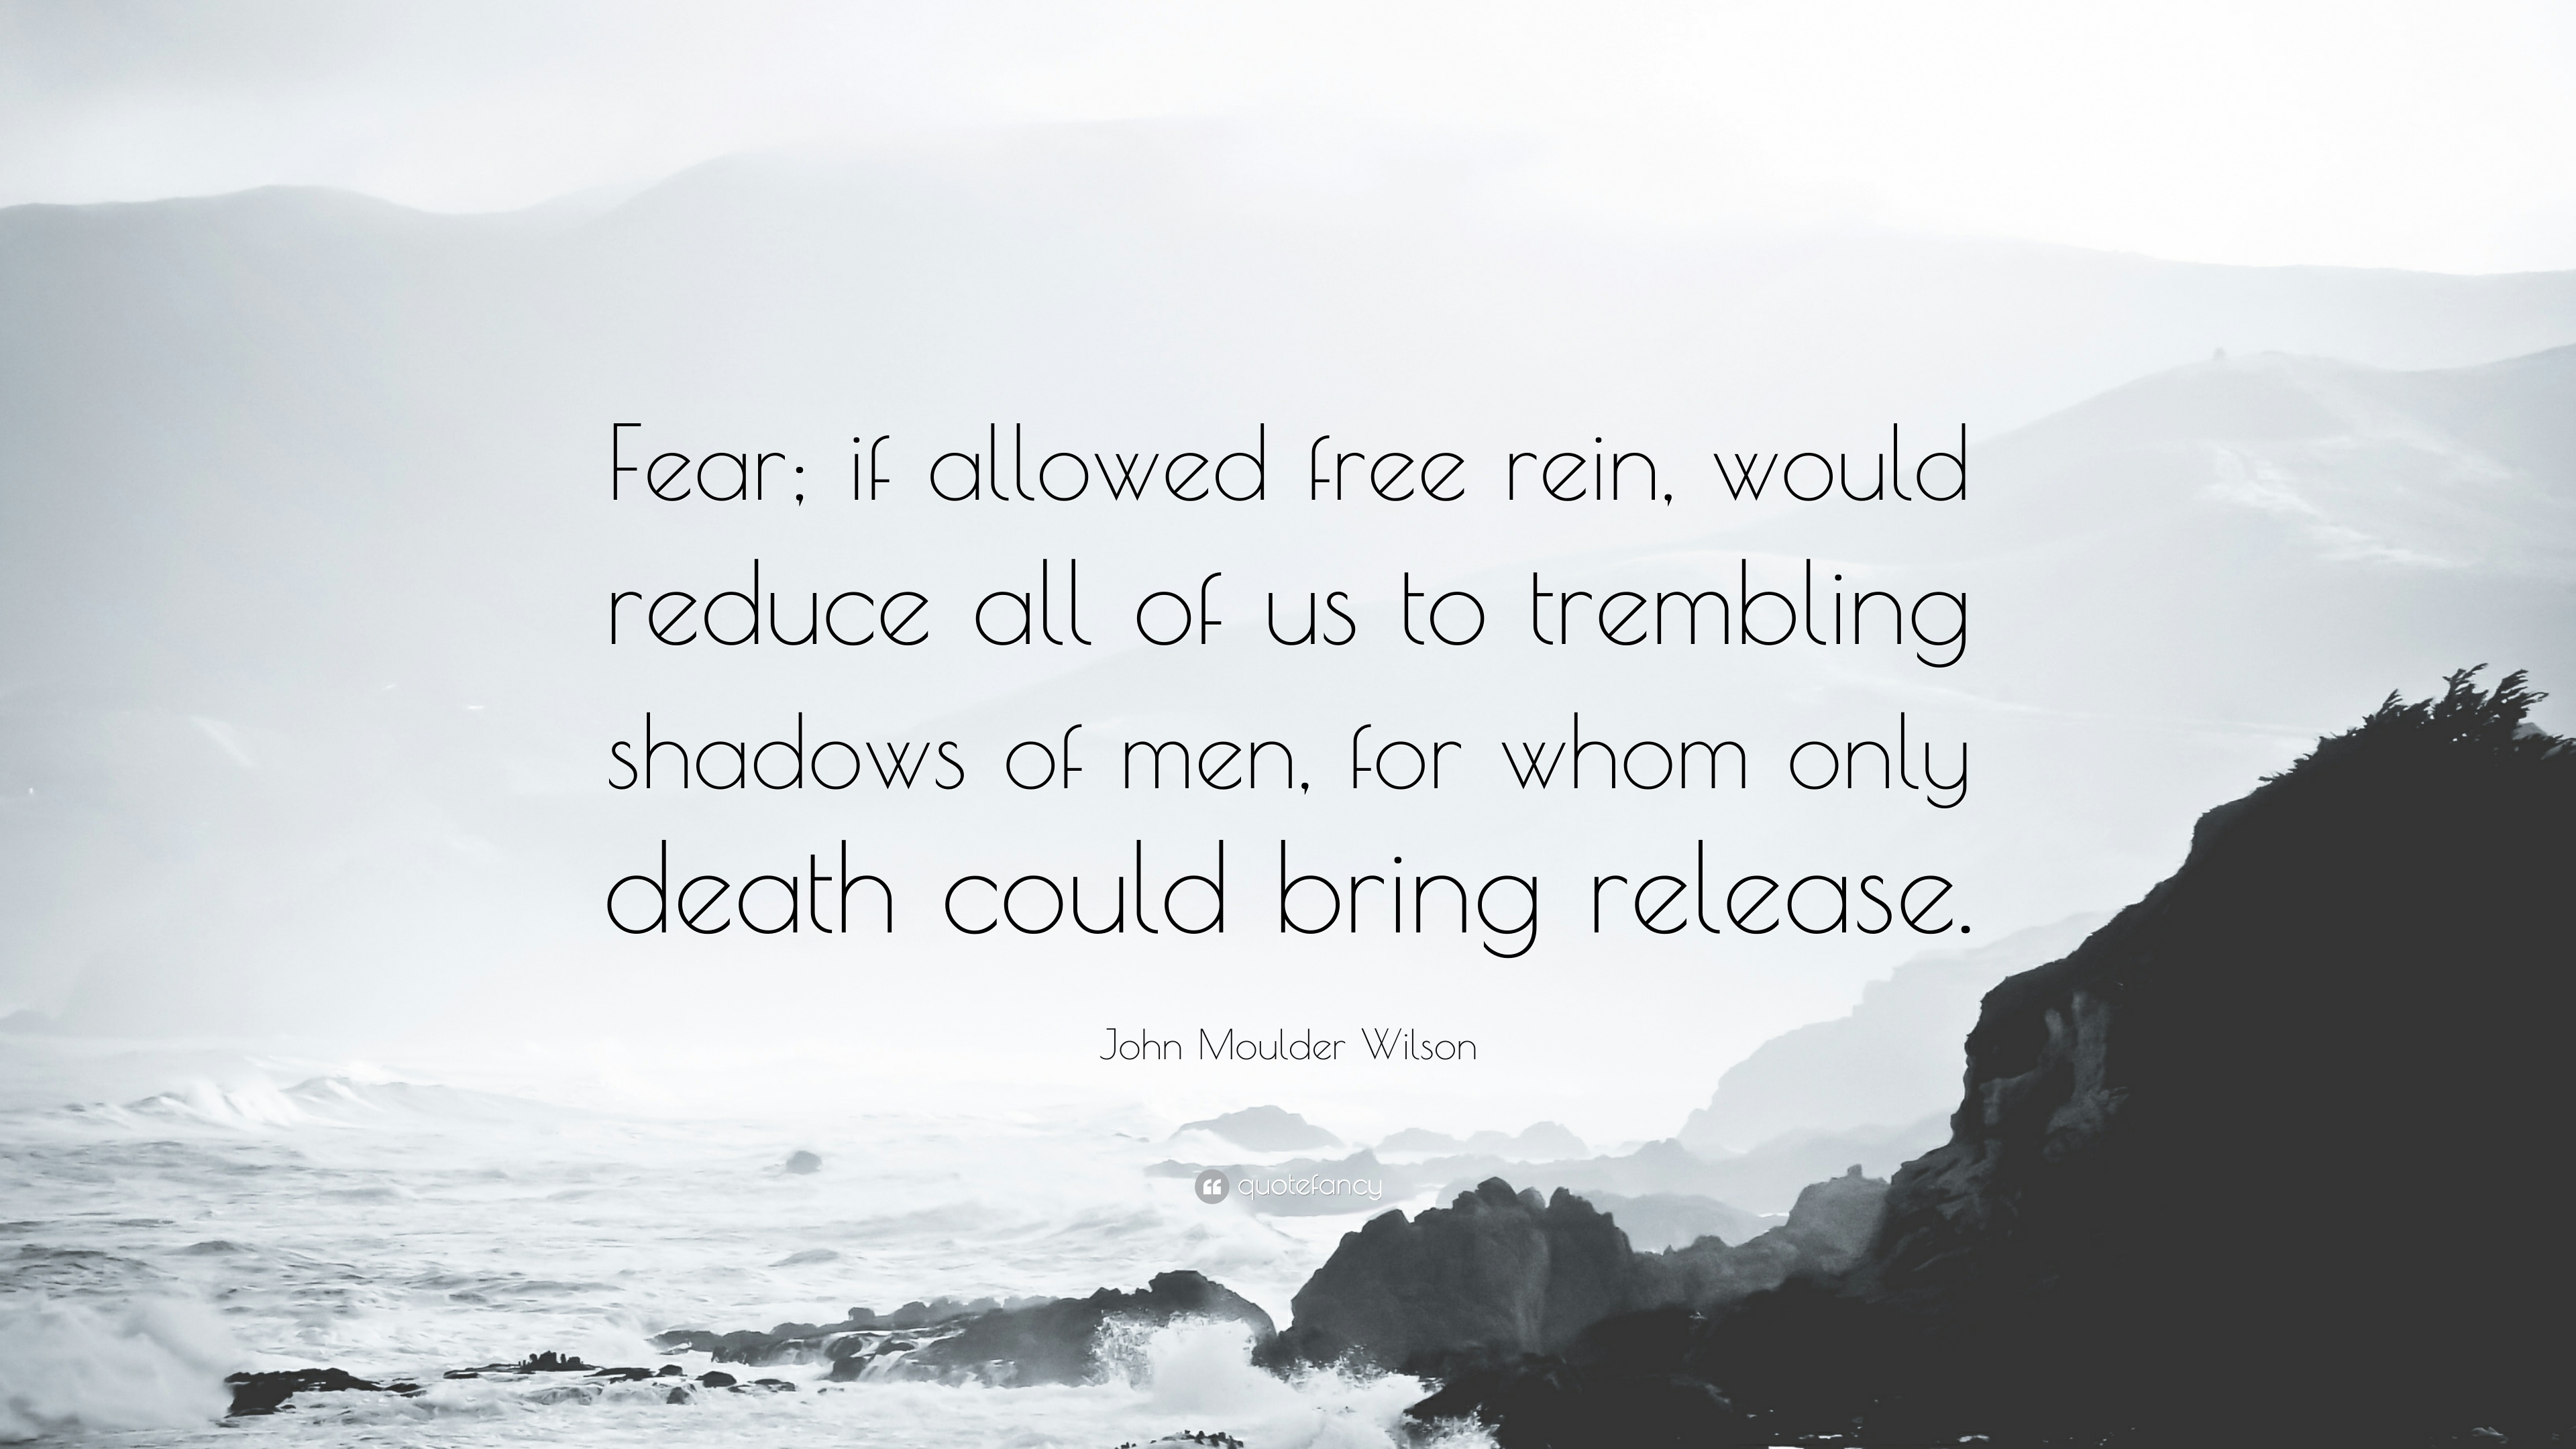 John Moulder Wilson Quote: “Fear; if allowed free rein